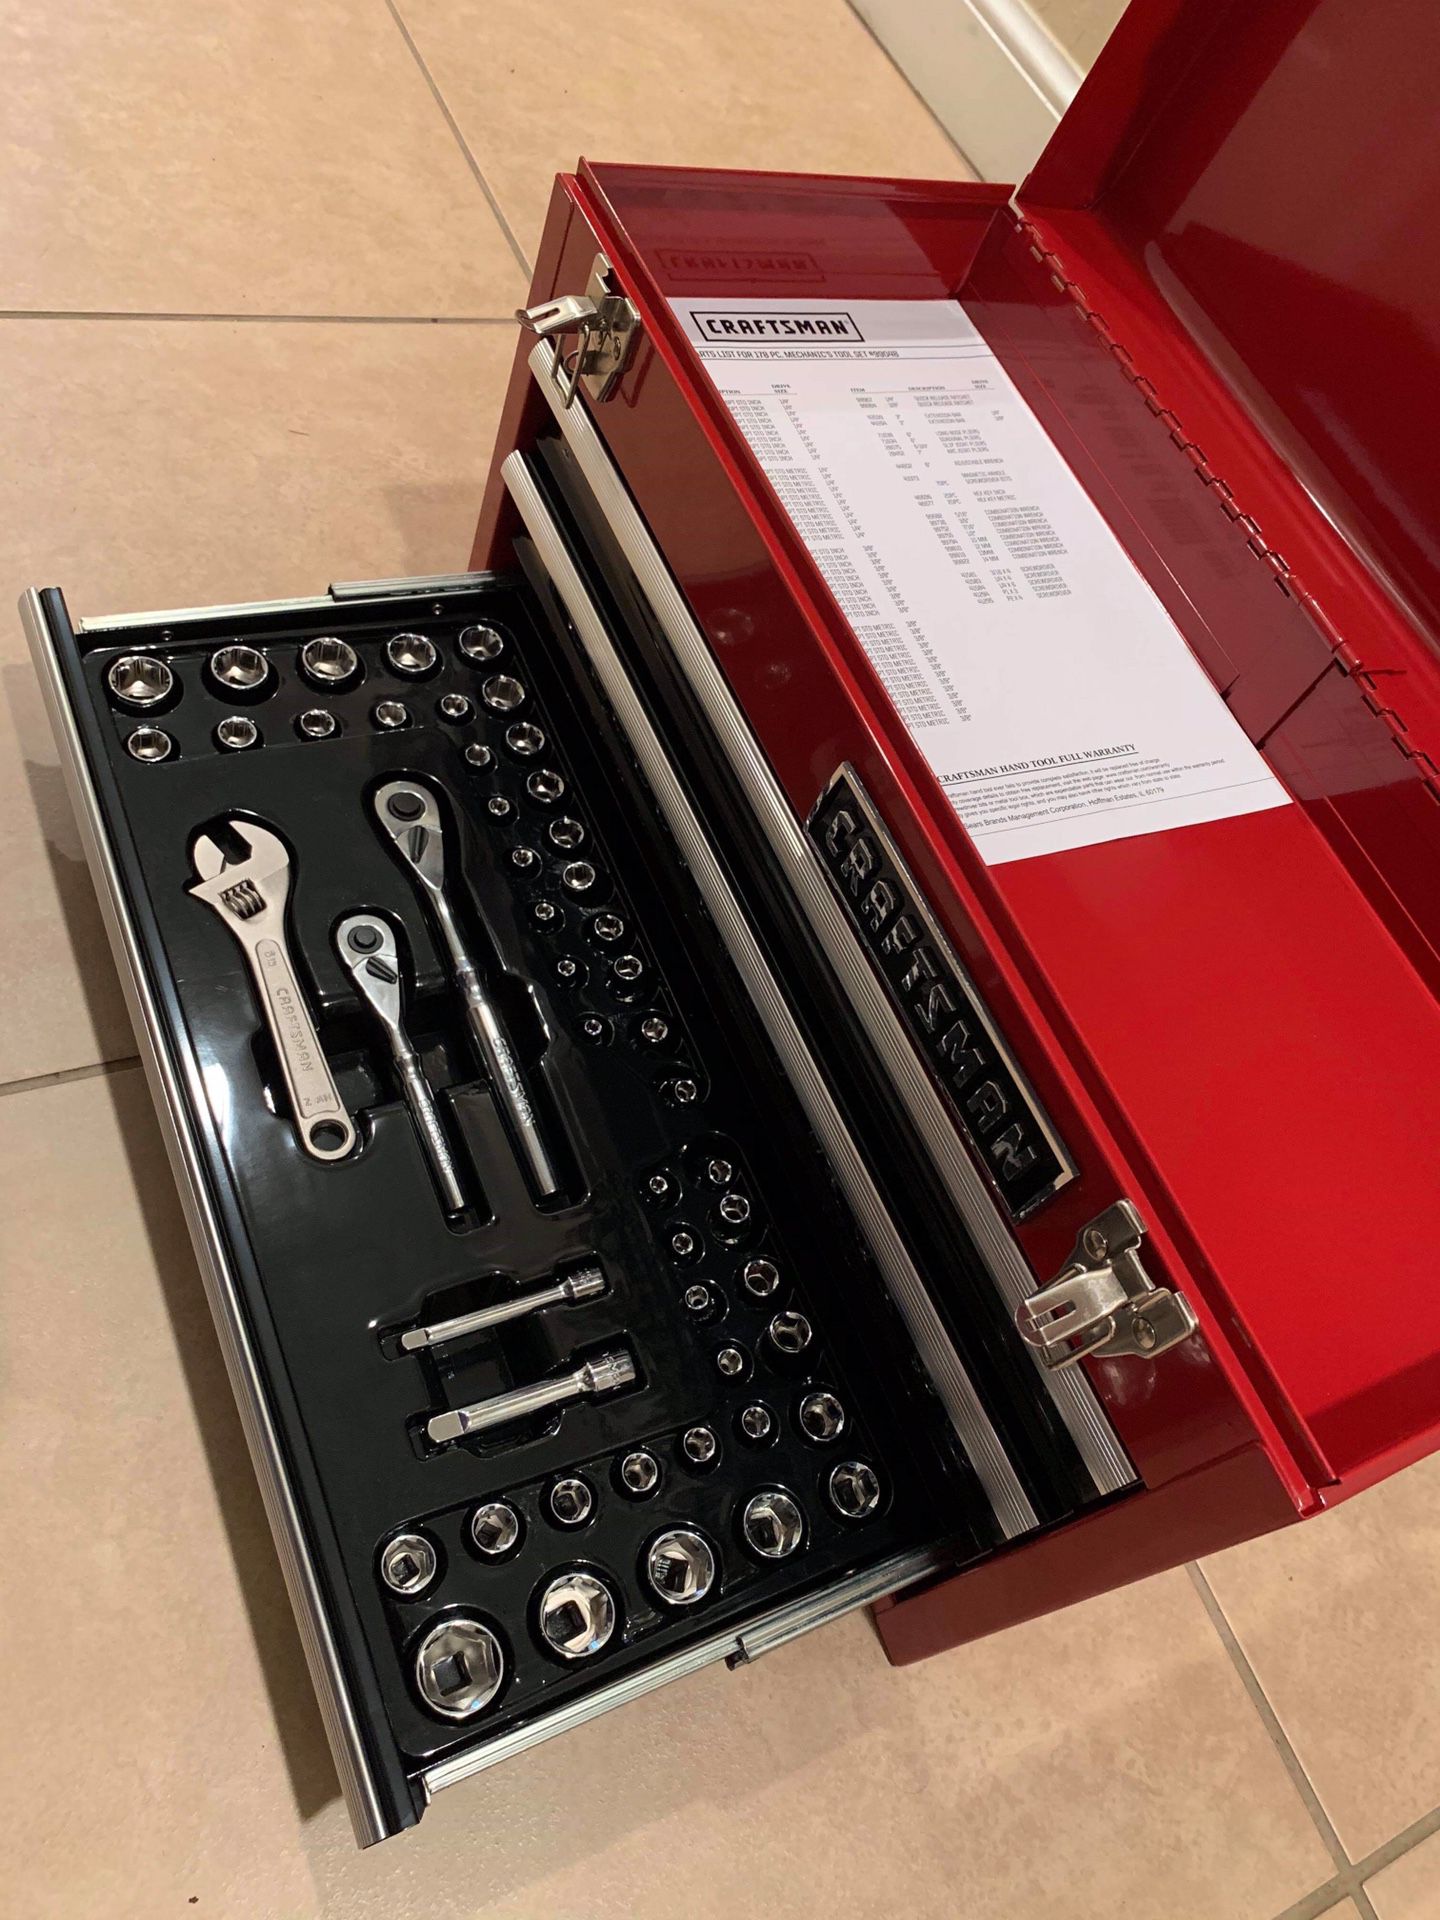 Portable Metal CRAFTSMAN Tool Box with Tools - NEW in original box